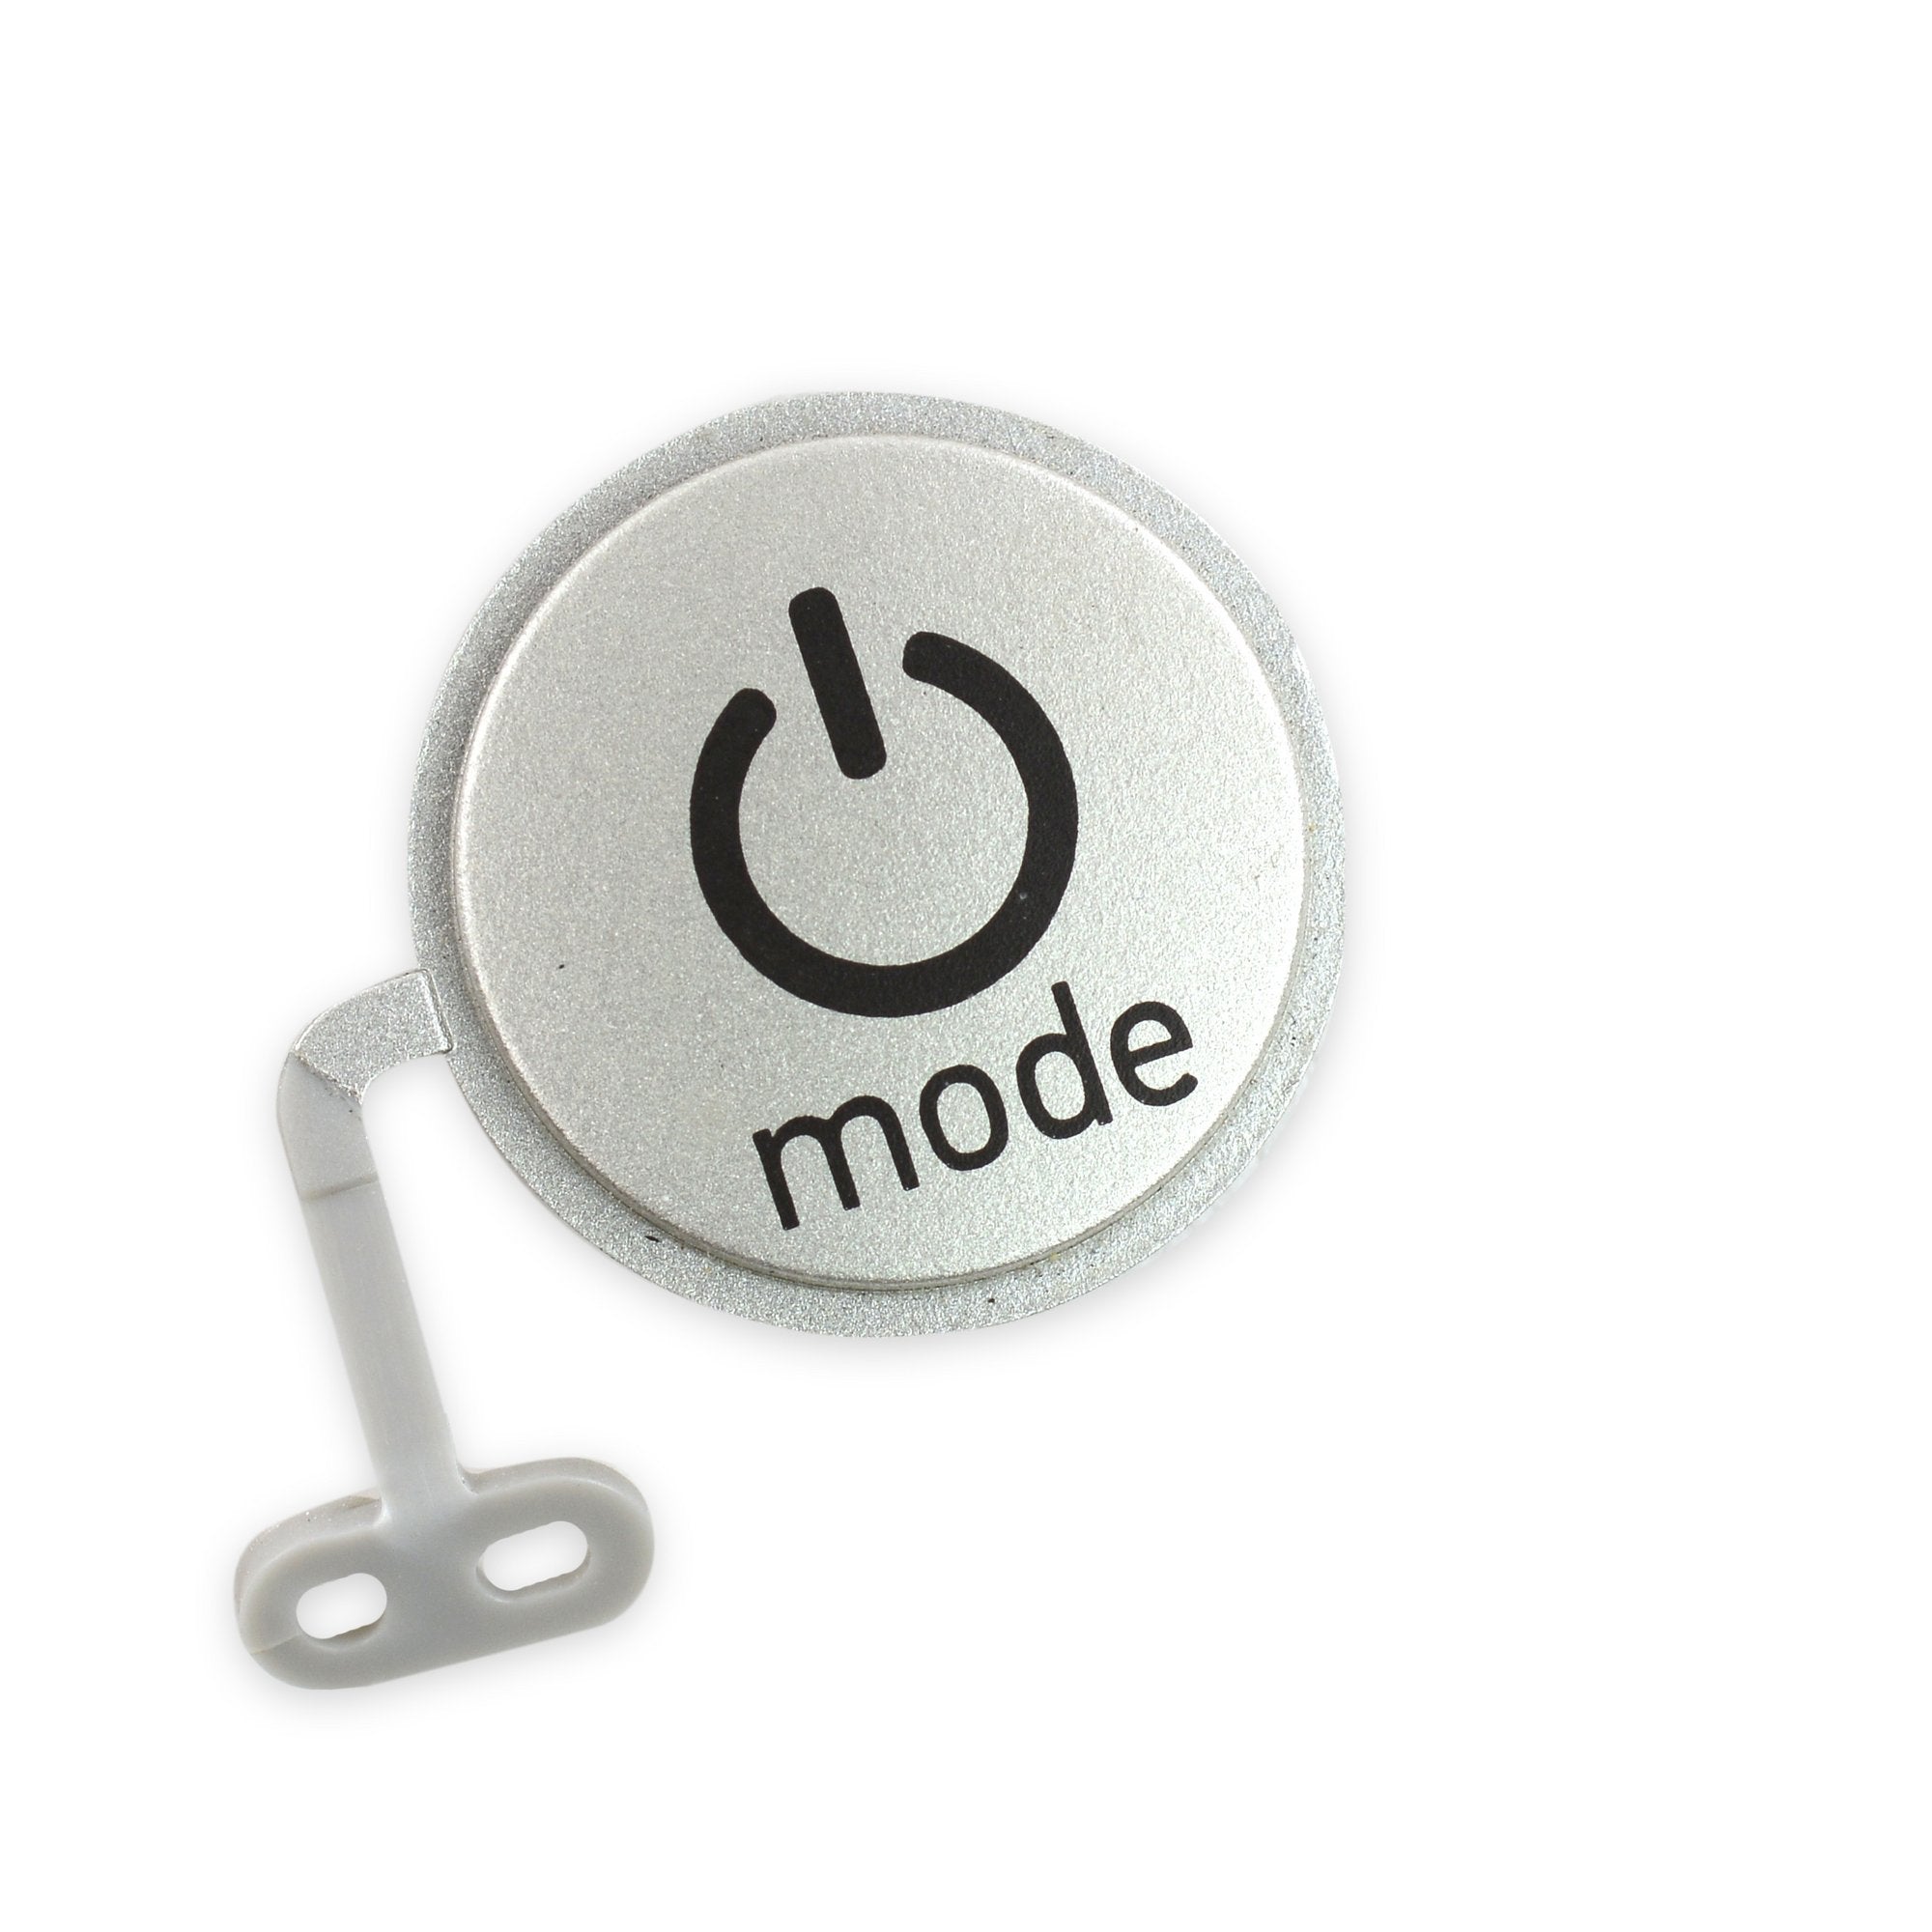 GoPro Hero3 Silver Power/Mode Button Cover